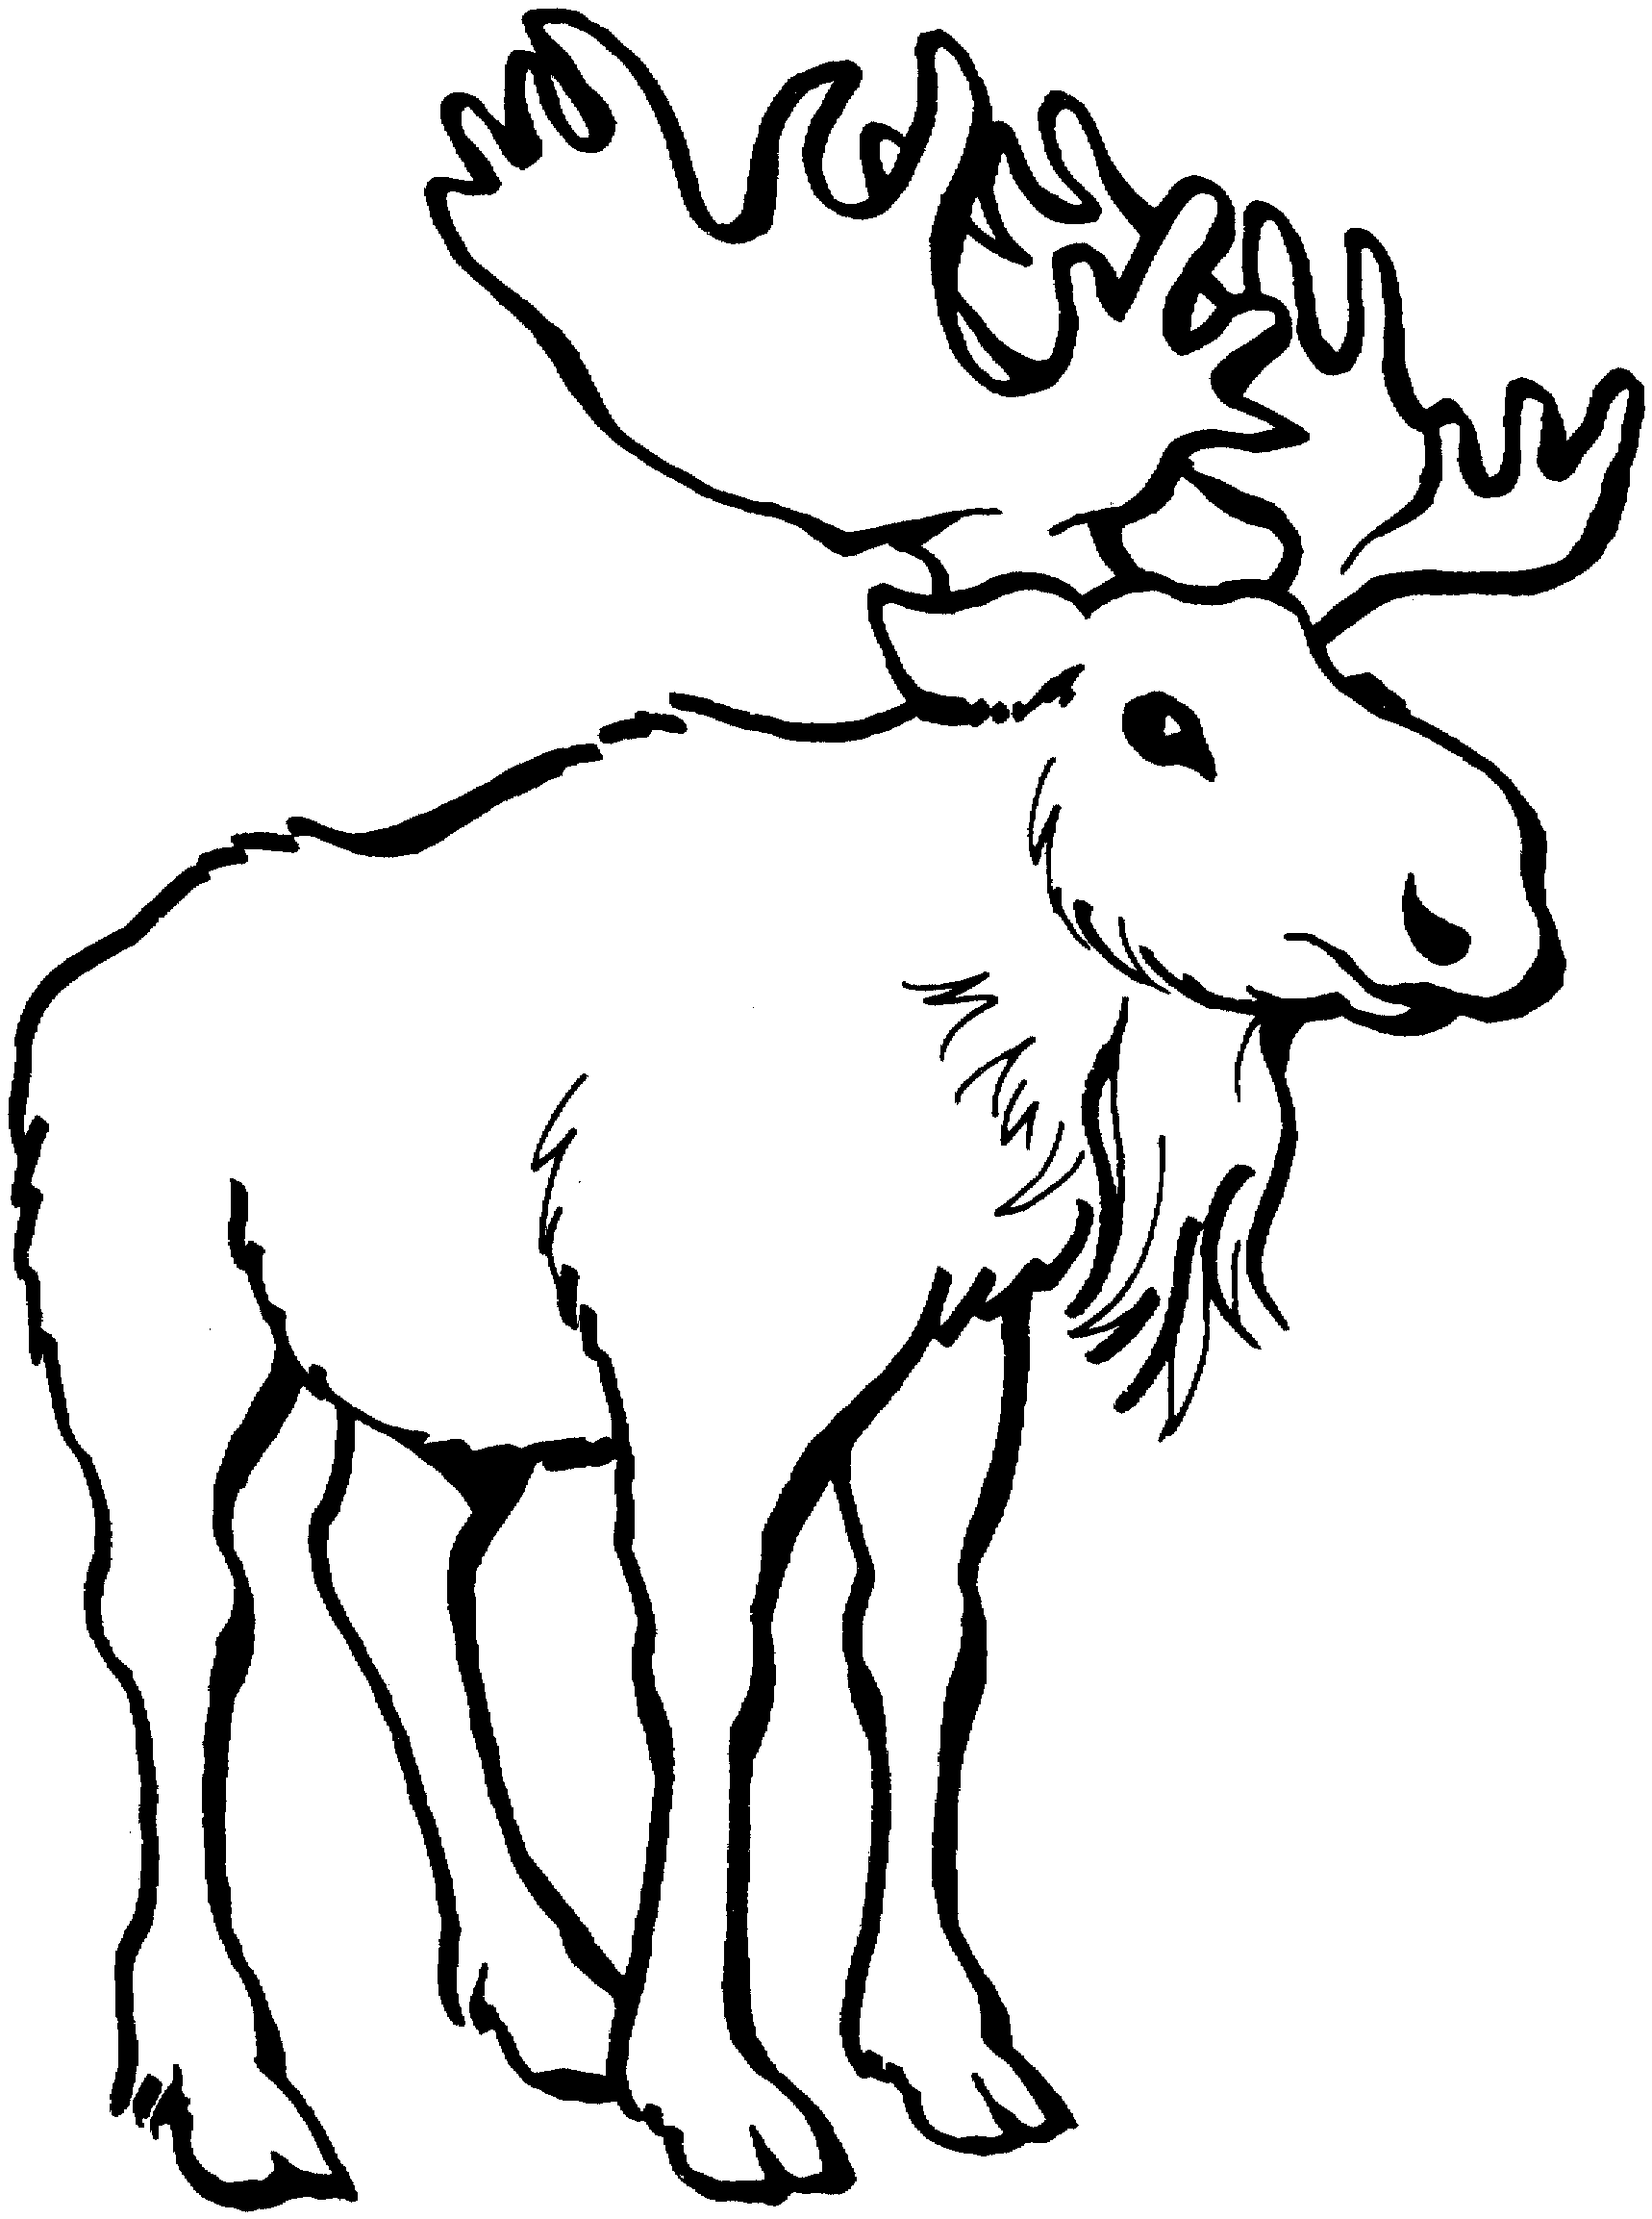 Moose Clipartby anortnik8/376